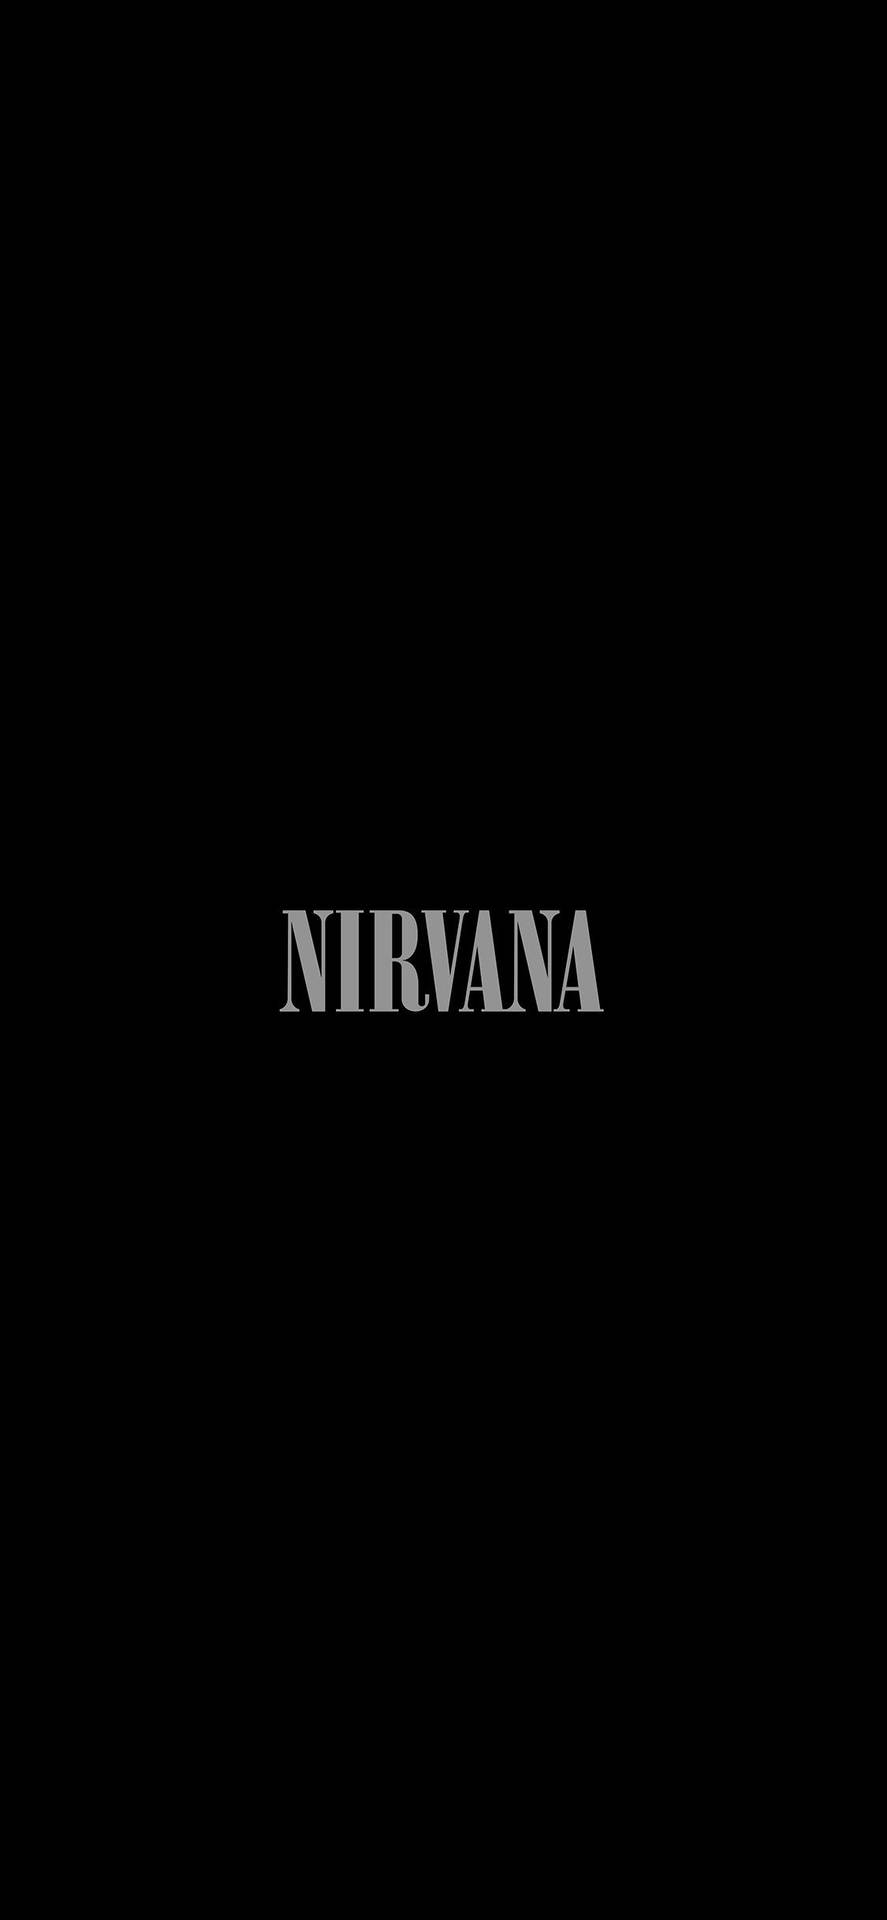 Nirvana Plain Black Background